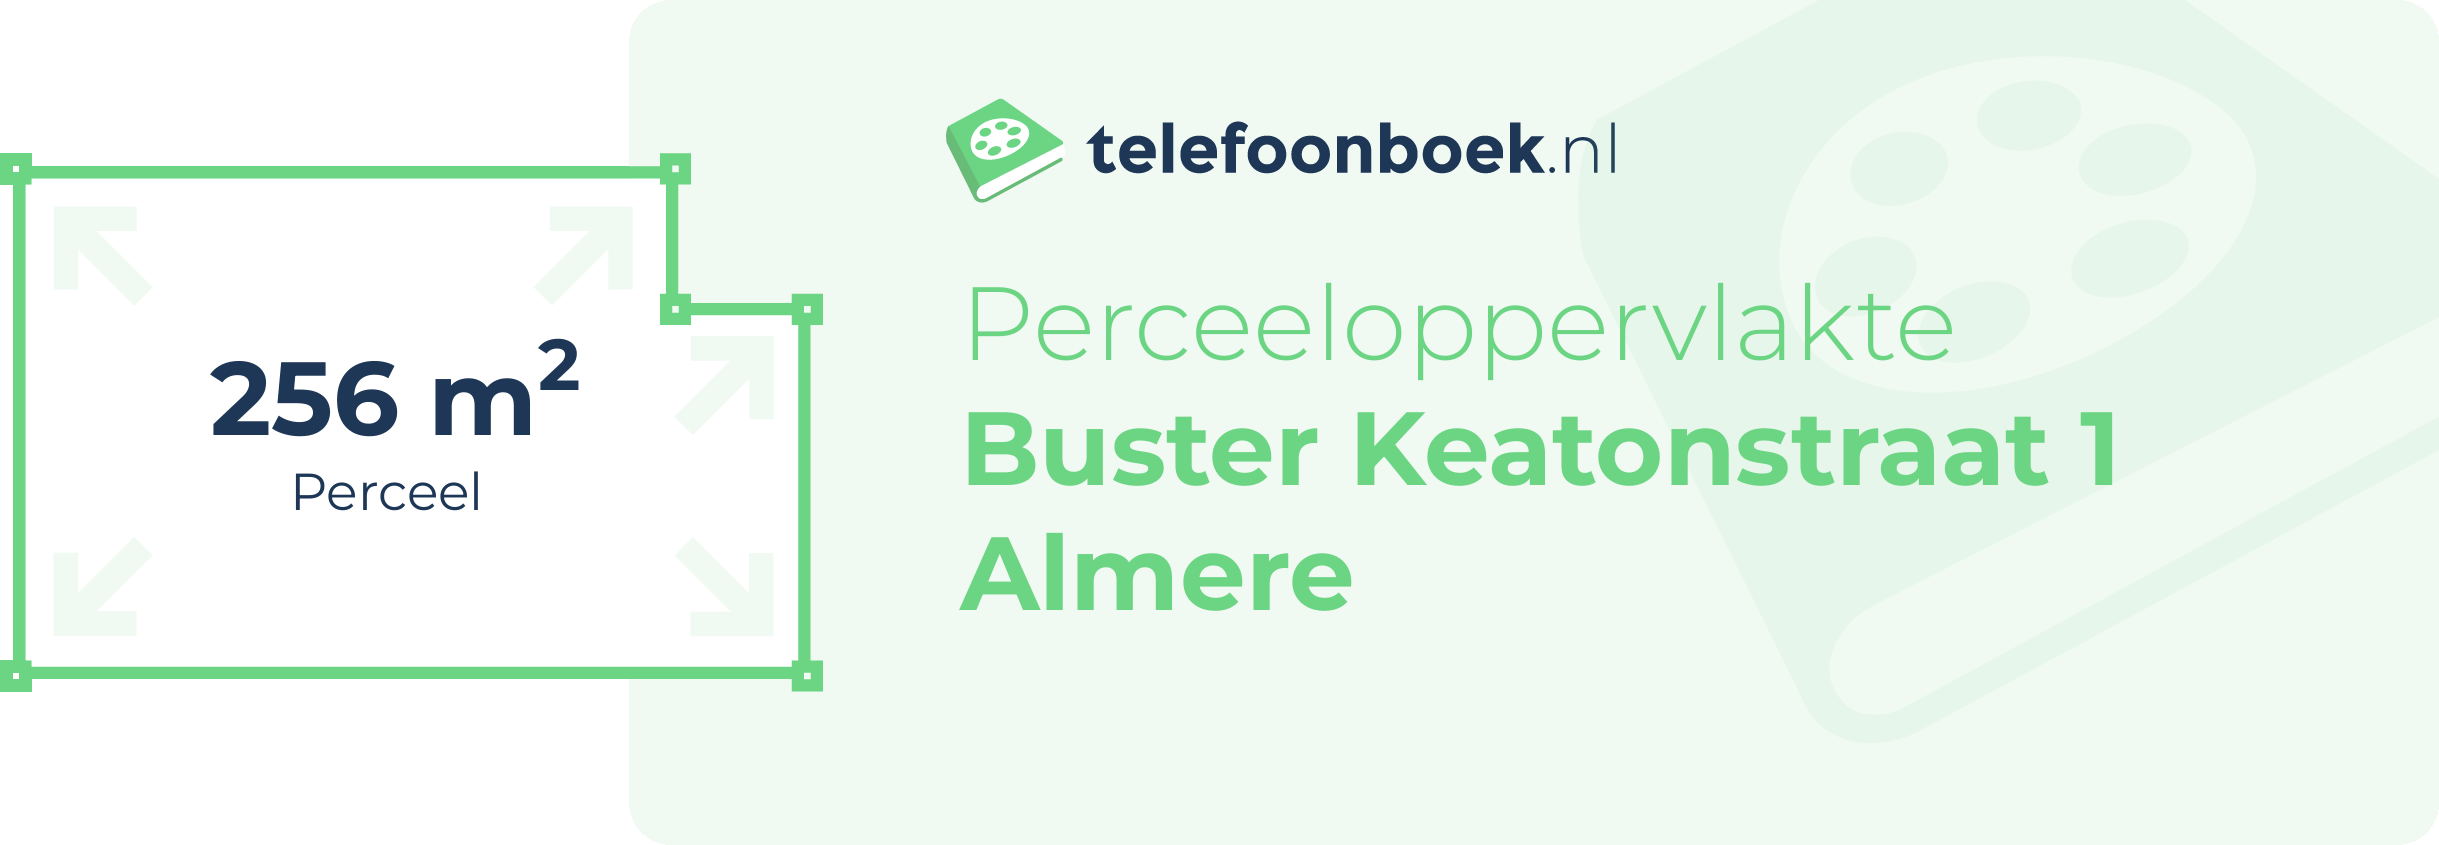 Perceeloppervlakte Buster Keatonstraat 1 Almere